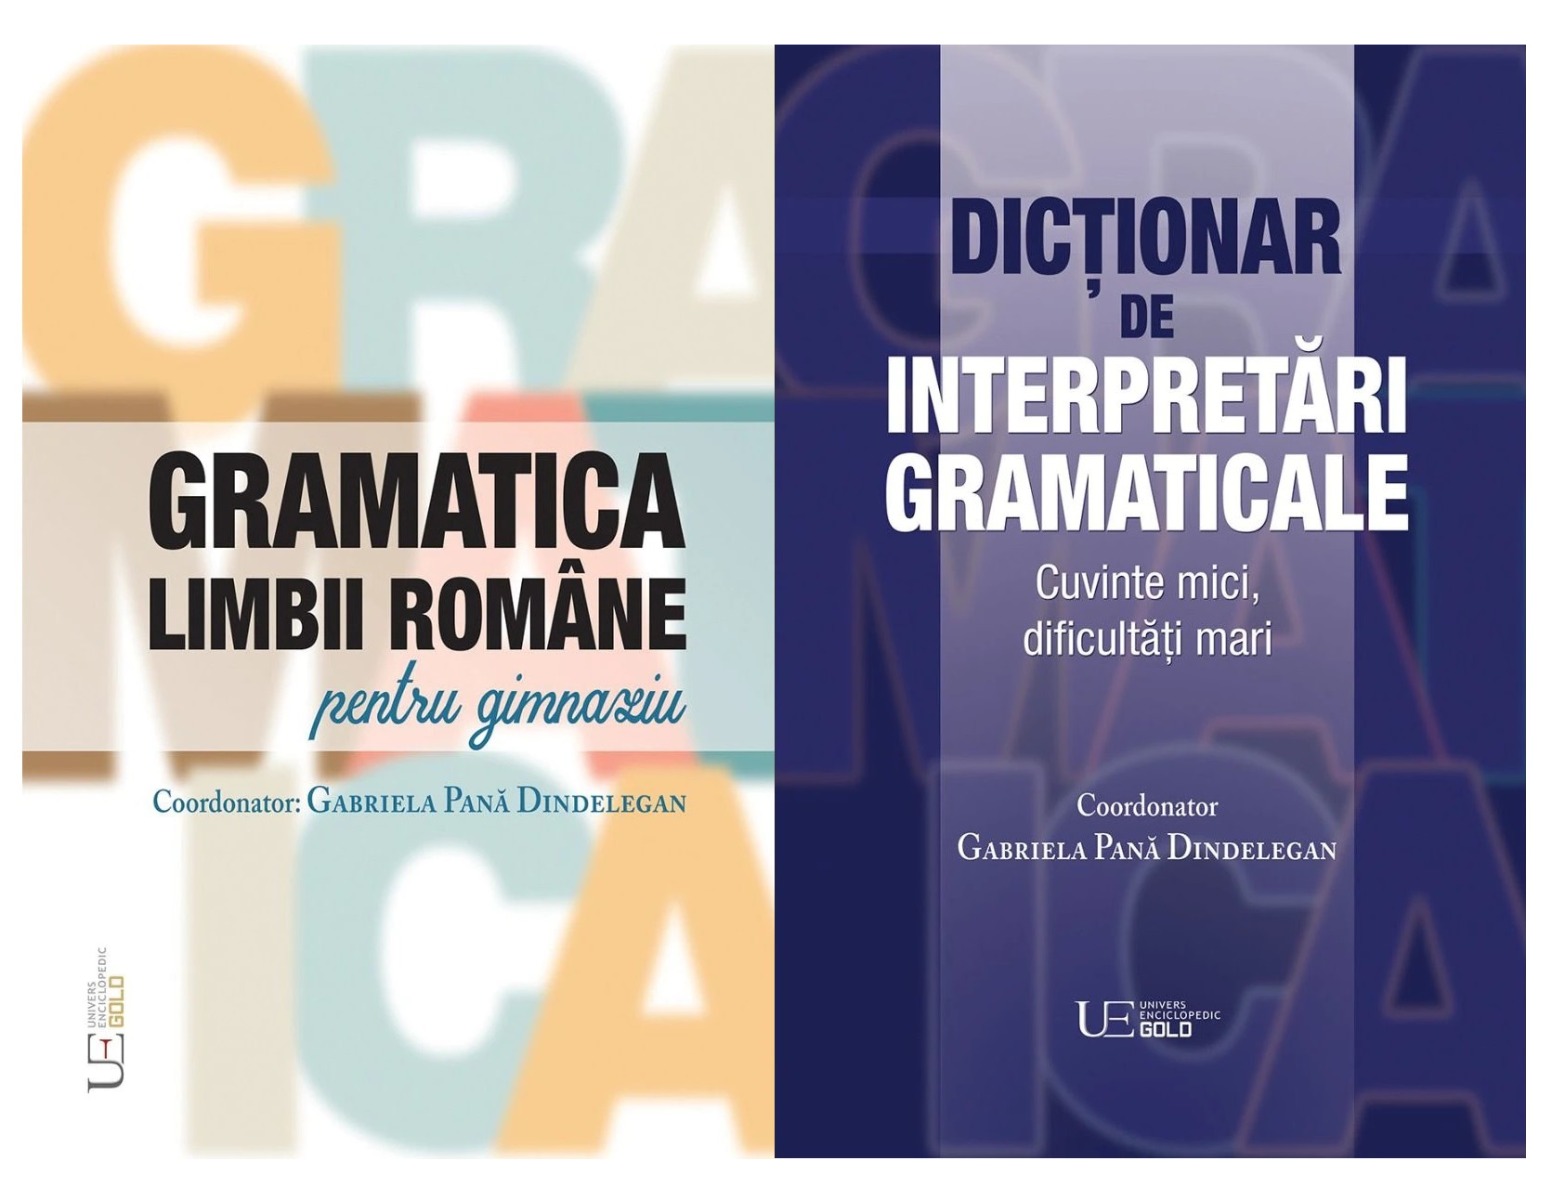 Pachet Gramatica limbii romane si Dictionar de interpretari gramaticale - Gabriela Pana Dindelegan (coord.)